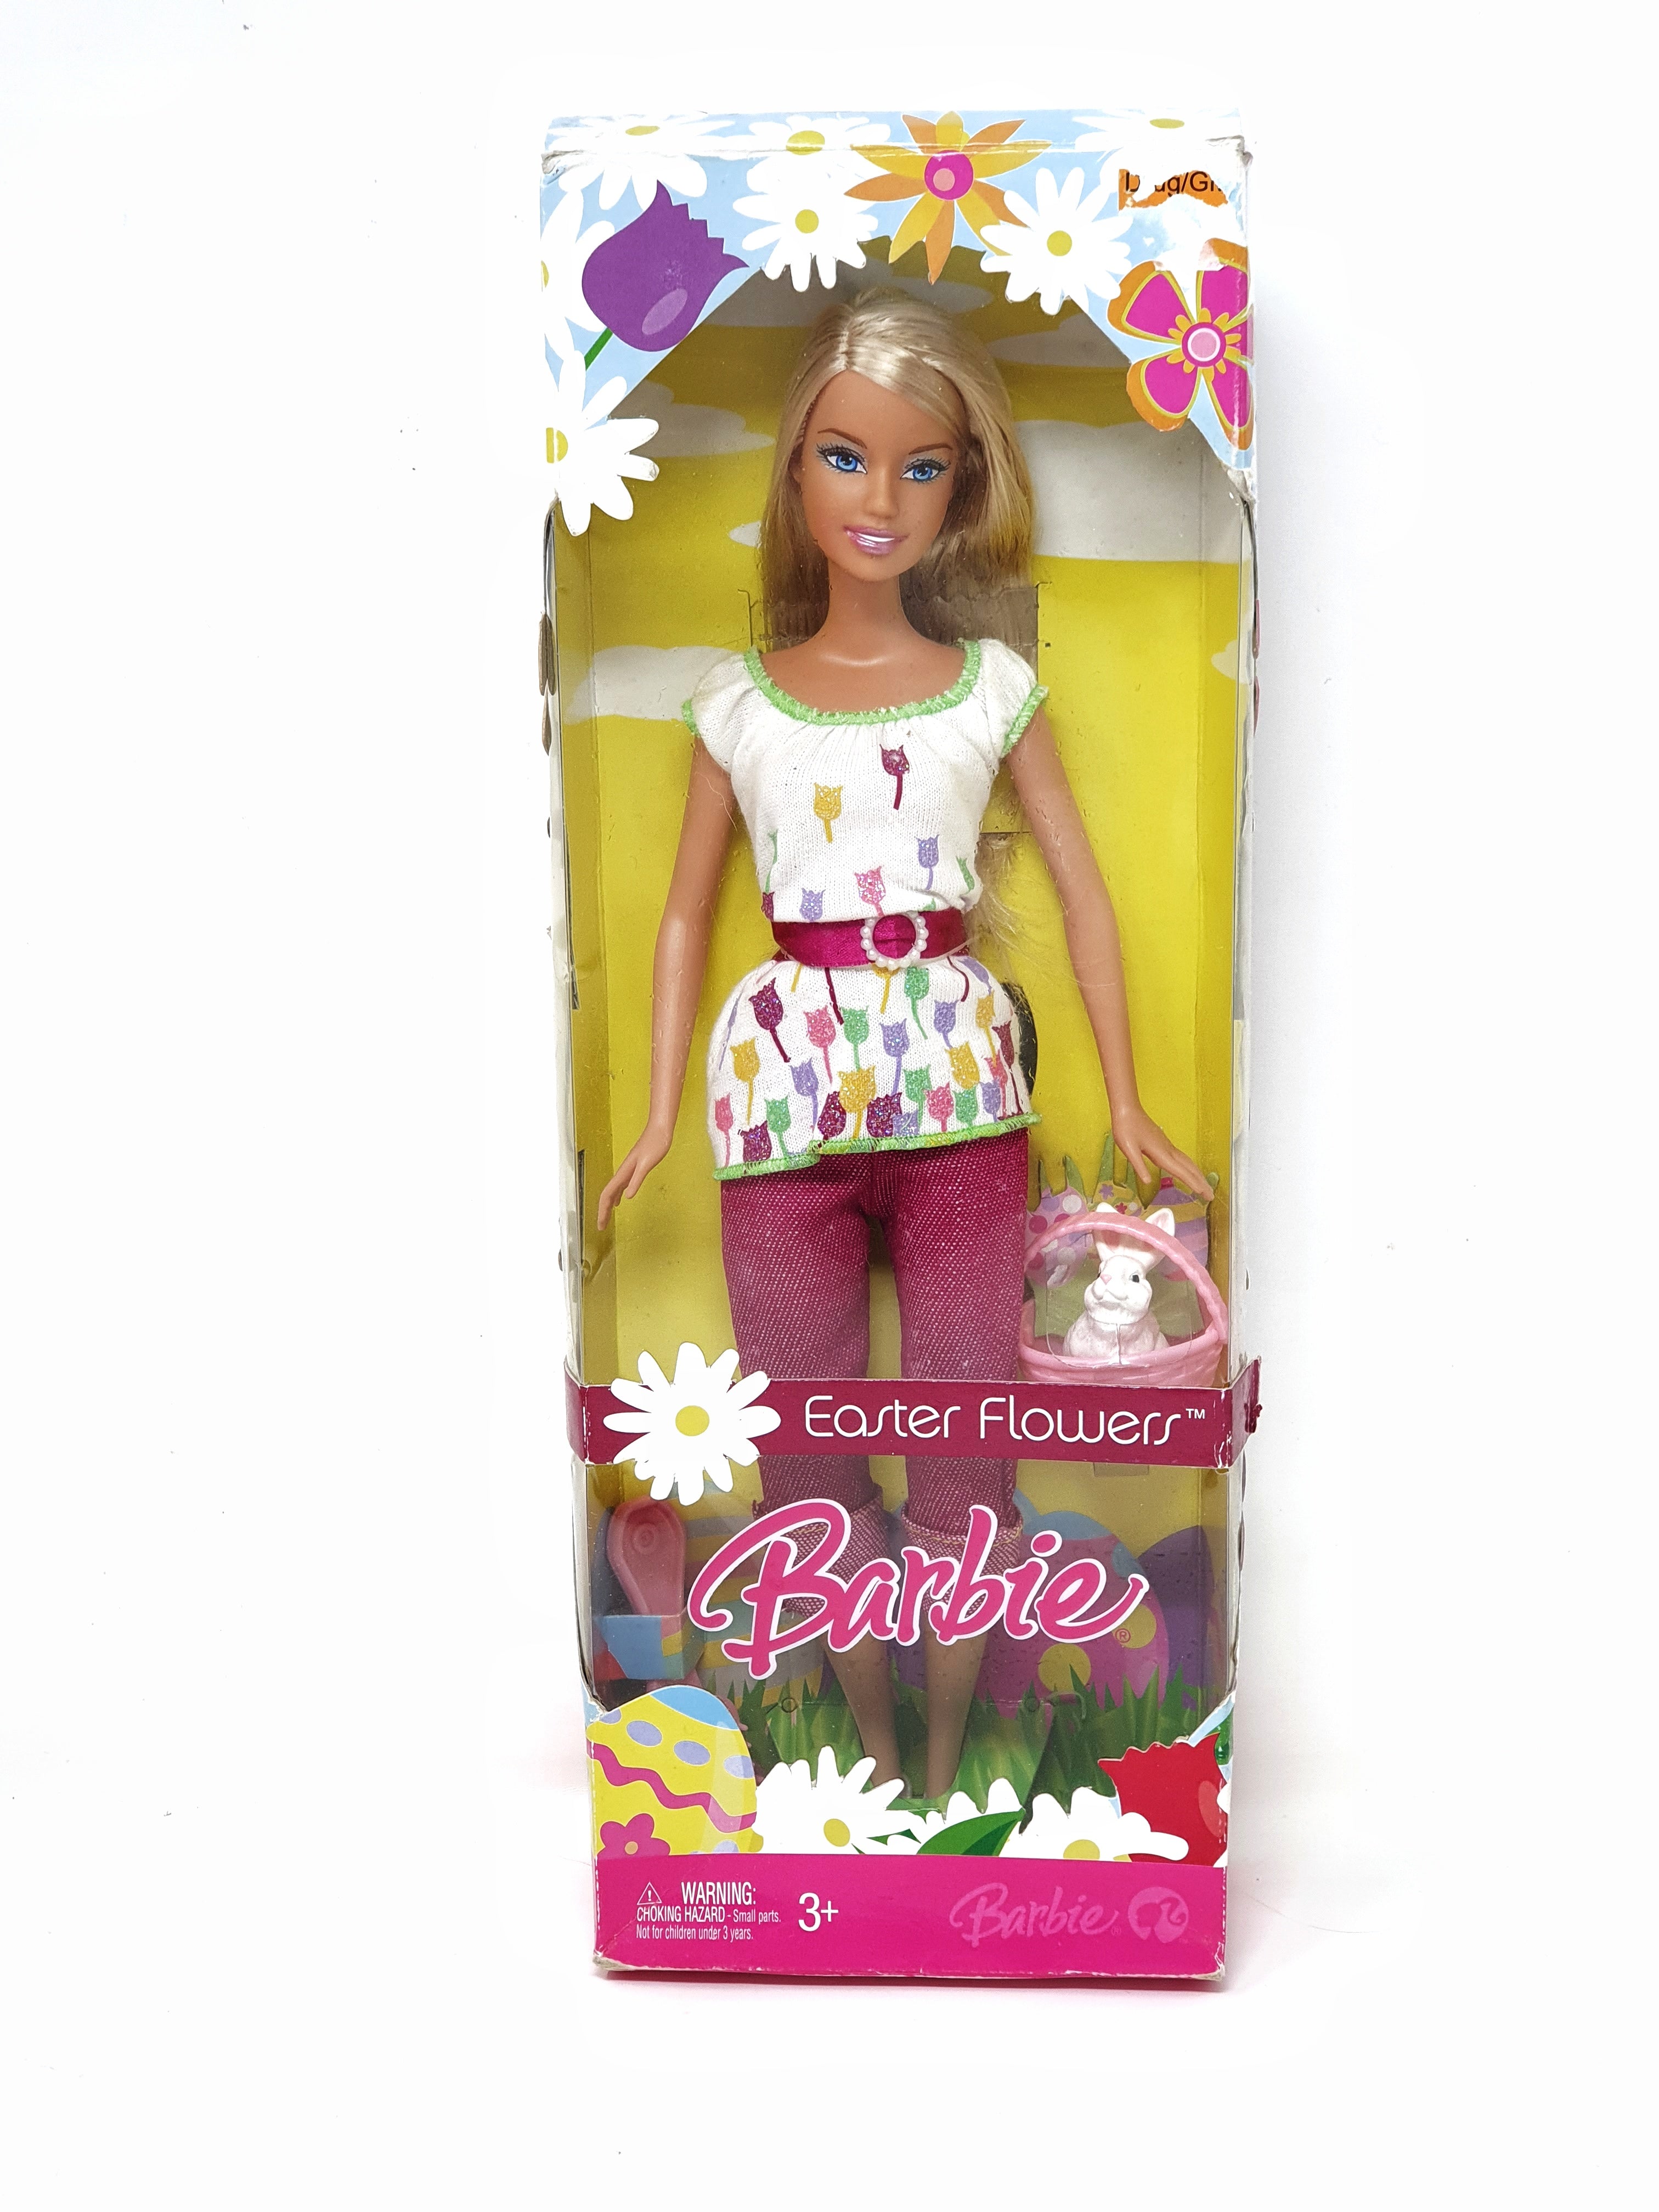 Barbie Easter Flower 2007 NRFB, Mattel